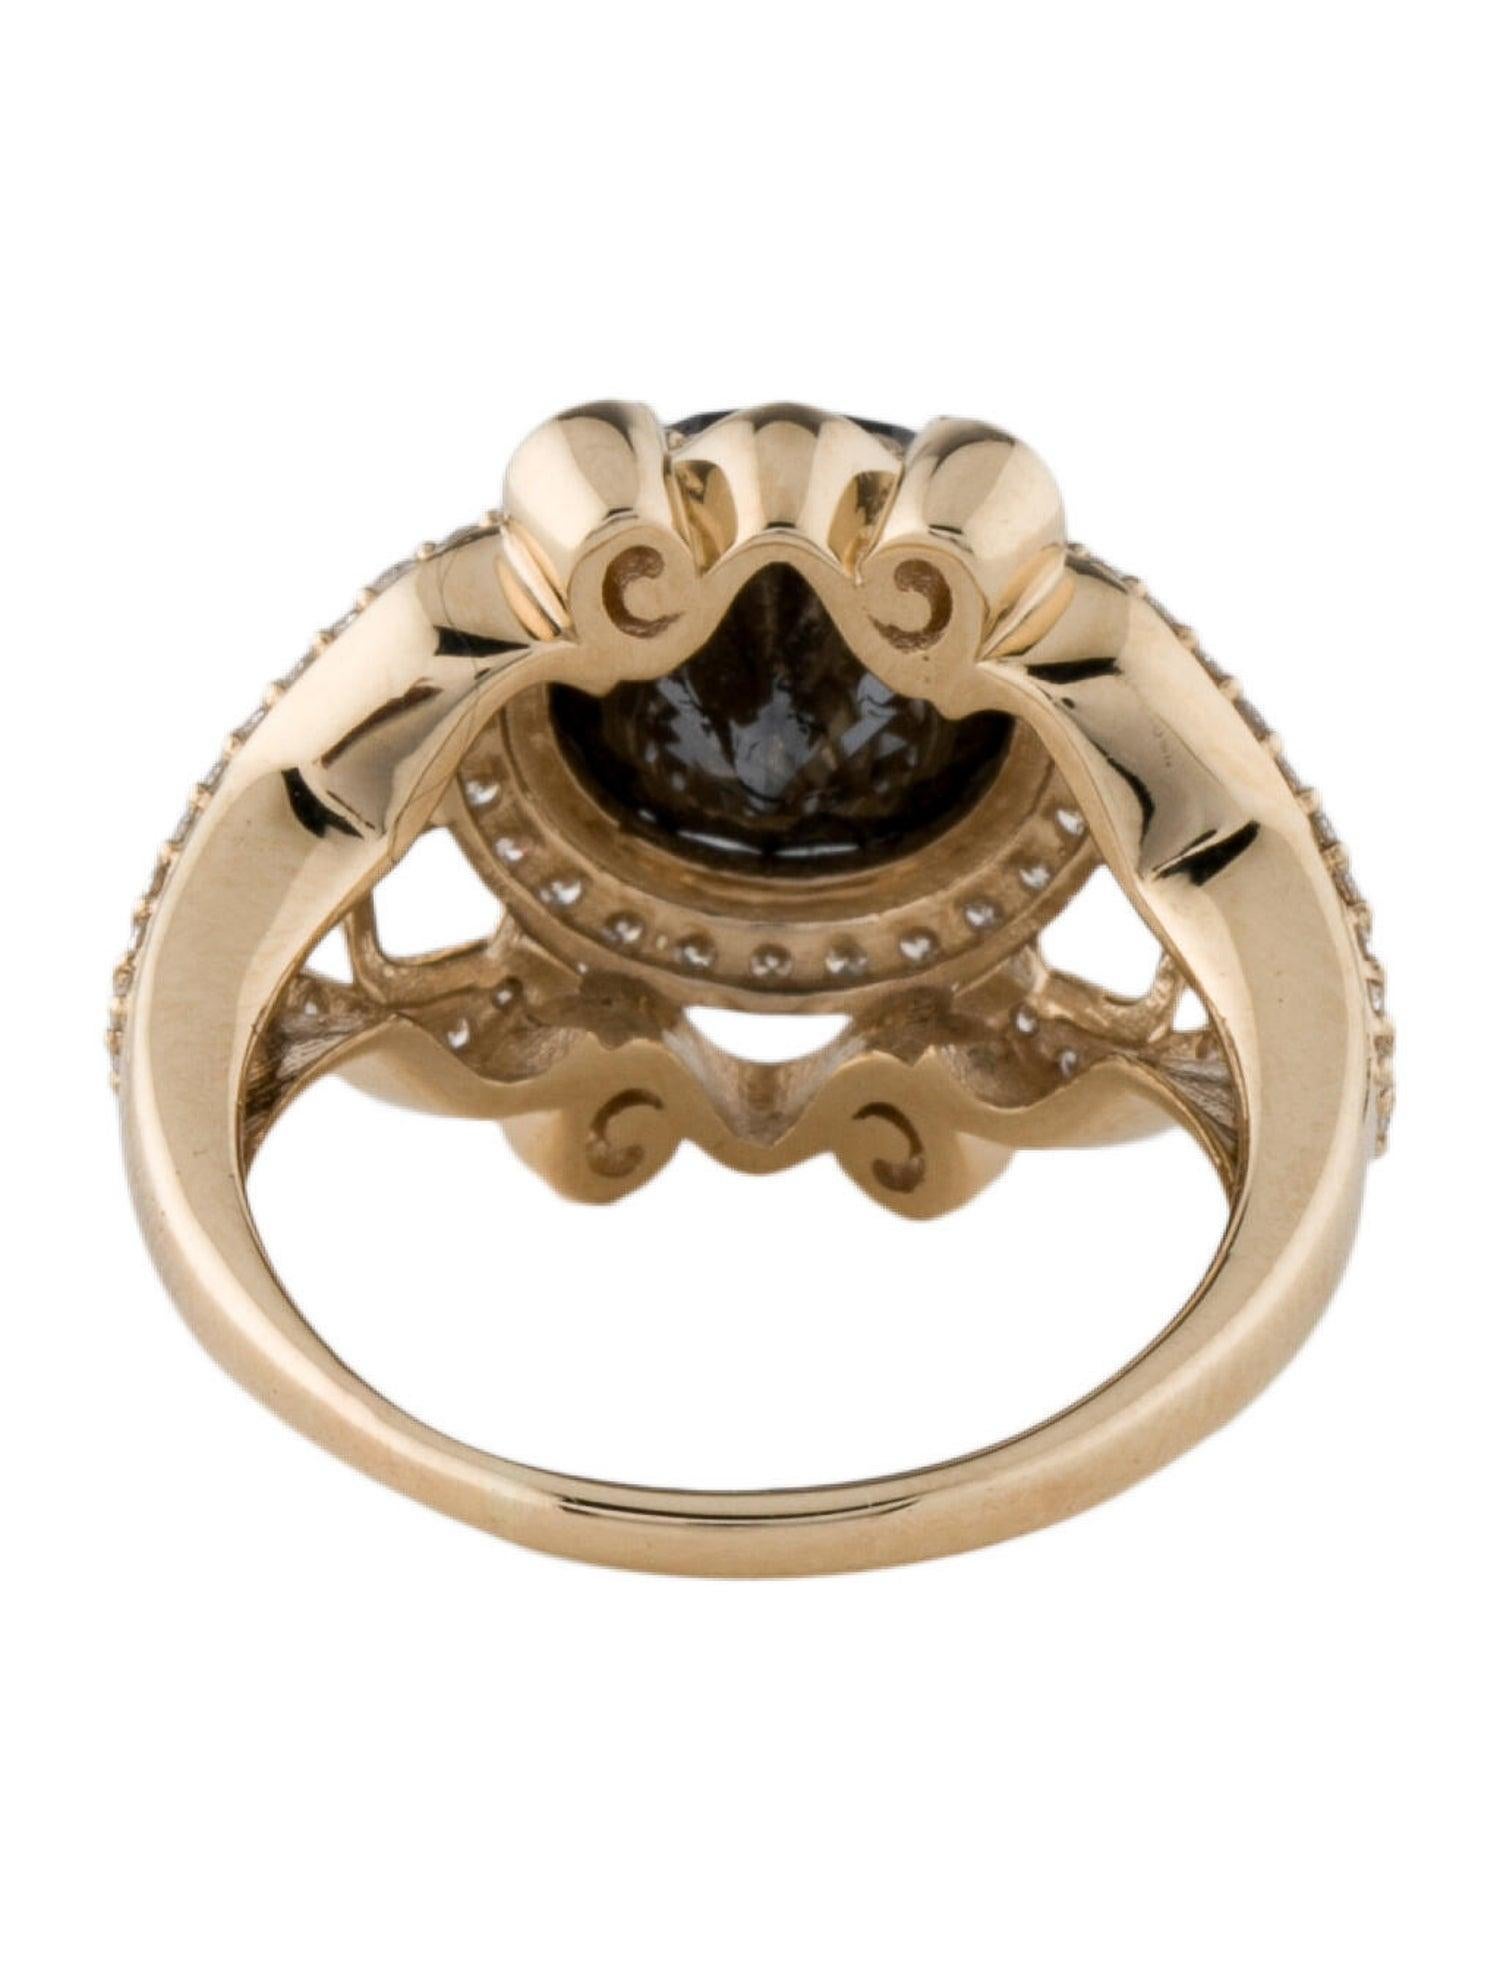 Brilliant Cut Opulent 14K Gold Diamond Cocktail Ring - 4.44ct Statement Piece - Size 6.75 For Sale